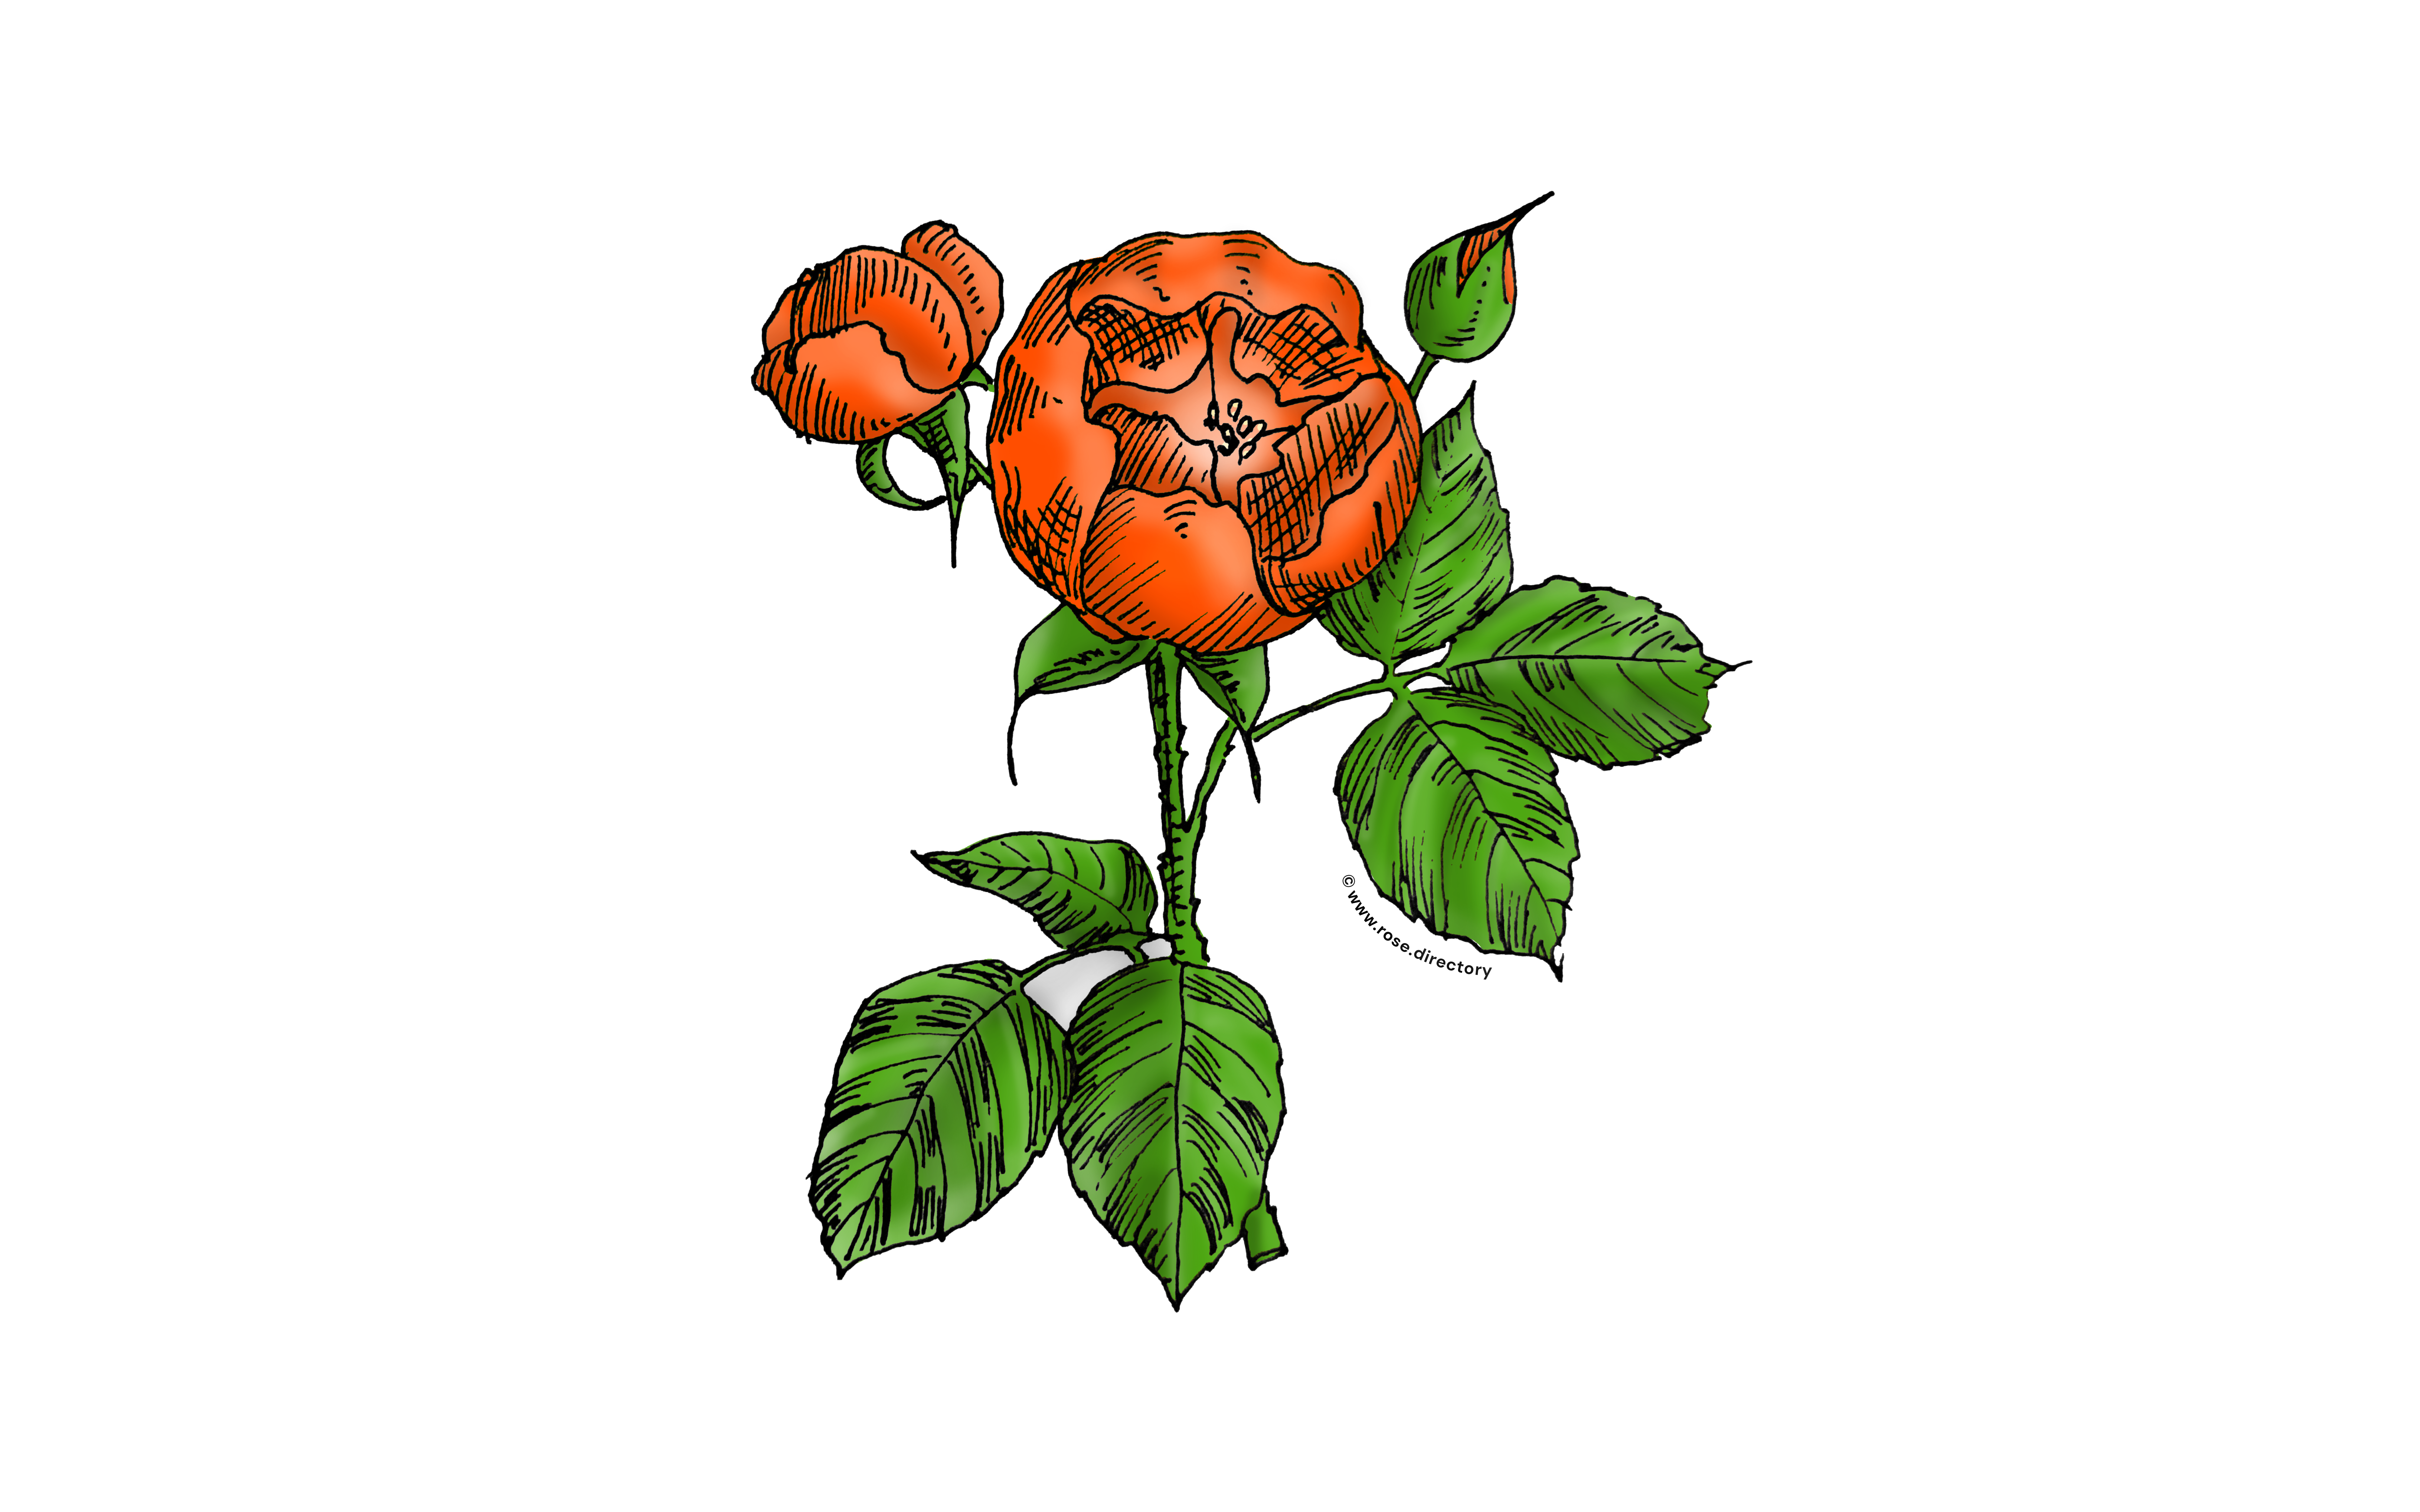 Orange Globular Rose Bloom Semi-Double 8-15 Petals In 2 Rows